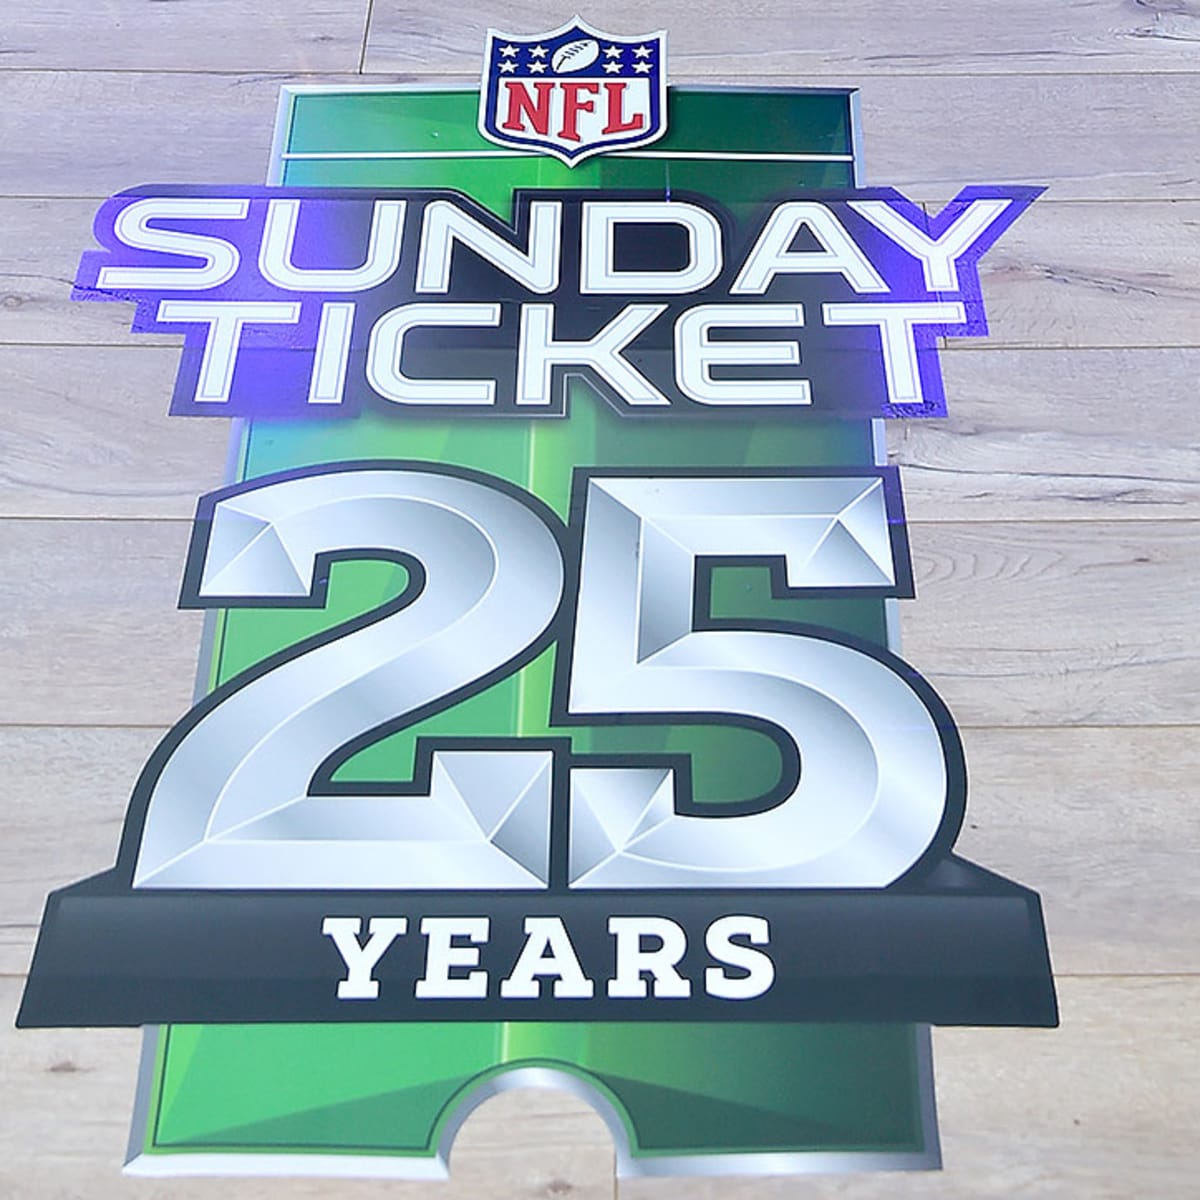 Big Deal‼️ DirecTV- NFL Sunday Ticket For FREE‼️ 